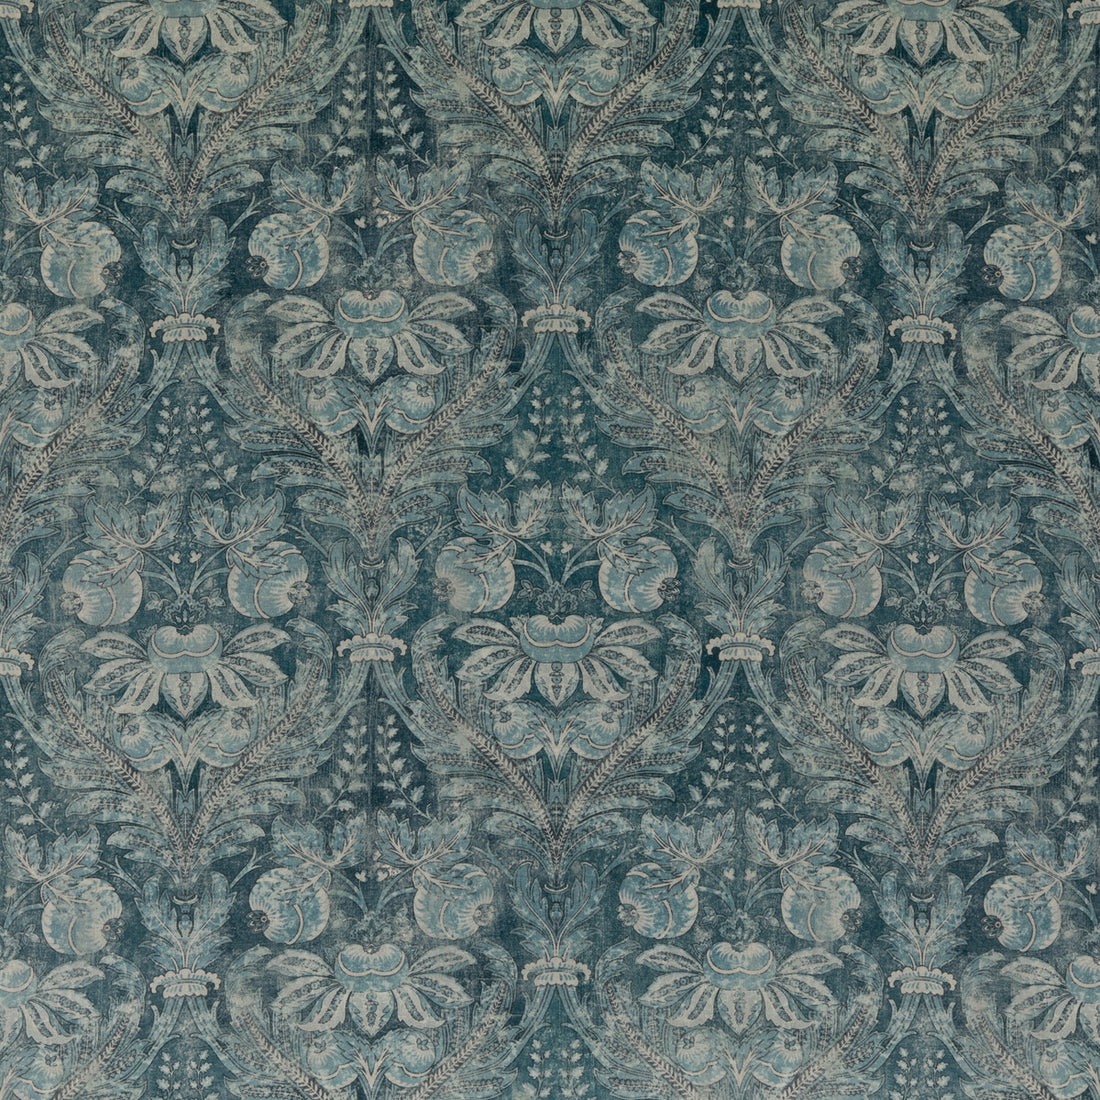 Lapura Velvet fabric in blue color - pattern BP10829.1.0 - by G P &amp; J Baker in the Coromandel collection